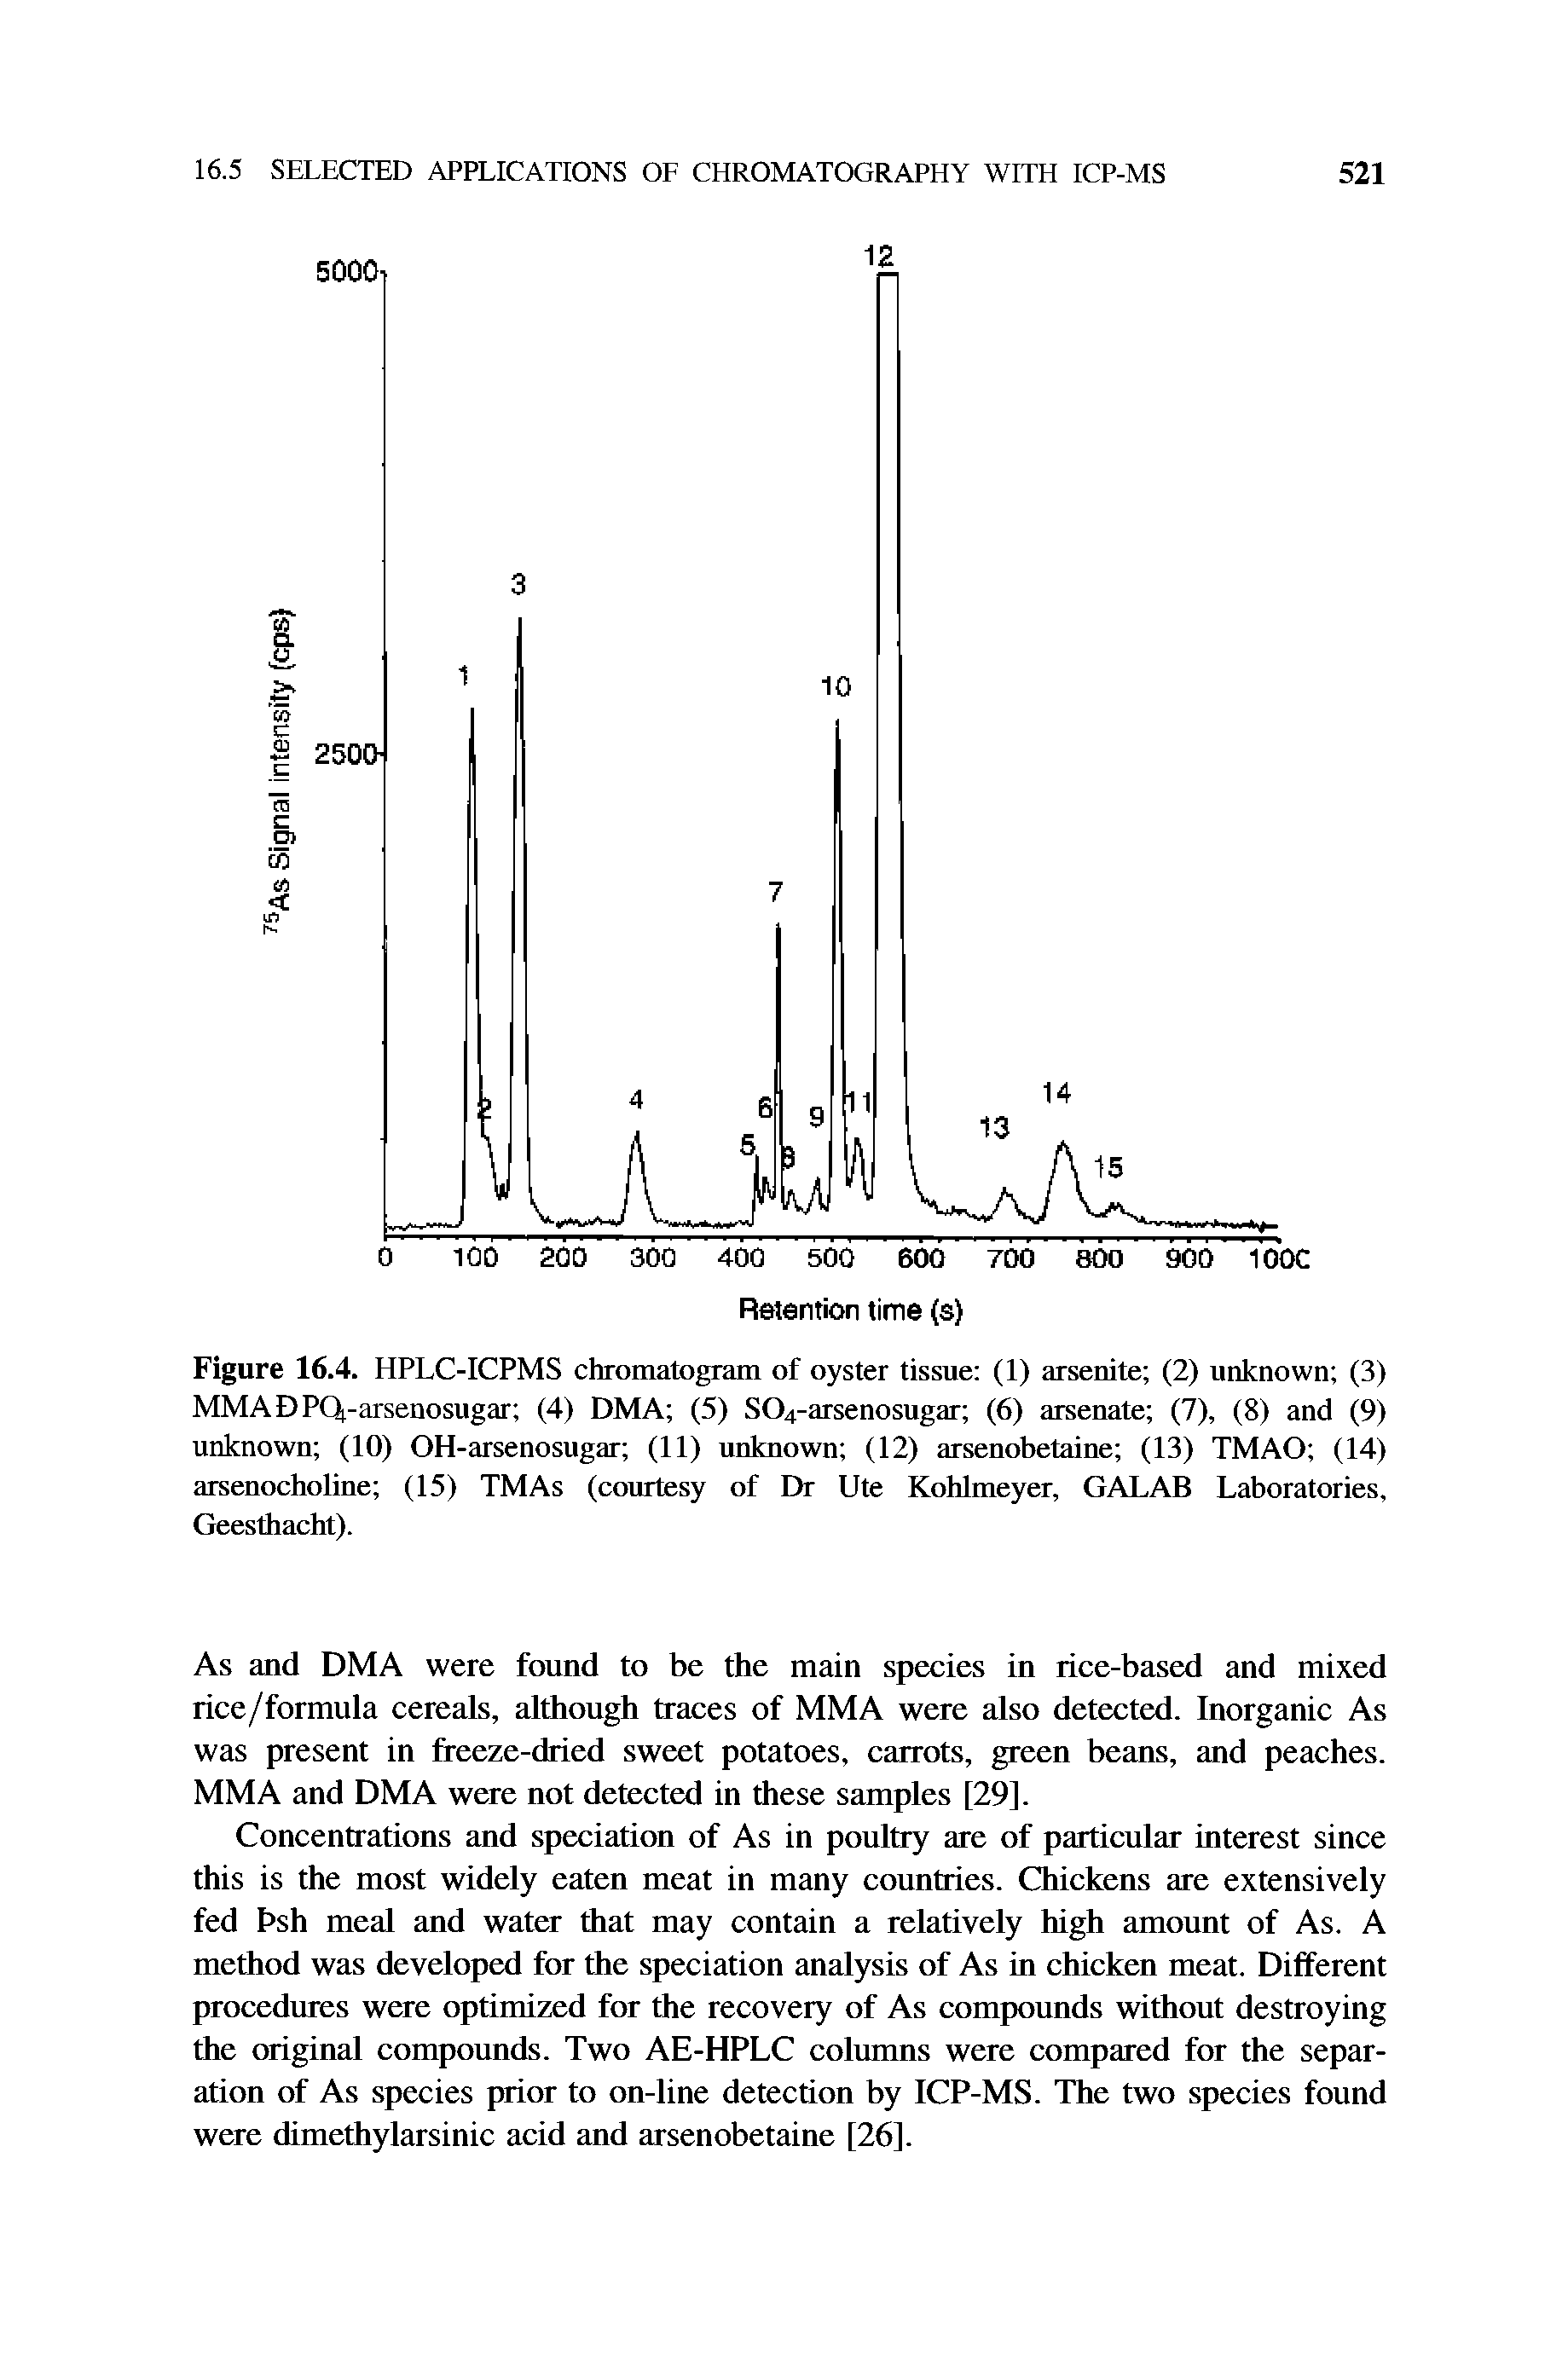 Figure 16.4. HPLC-ICPMS chromatogram of oyster tissue (1) arsenite (2) unknown (3) MMADPQ-arsenosugar (4) DMA (5) S04-arsenosugar (6) arsenate (7), (8) and (9) unknown (10) OH-arsenosugar (11) unknown (12) arsenobetaine (13) TMAO (14) arsenocholine (15) TMAs (courtesy of Dr Ute Kohlmeyer, GALAB Laboratories, Geesthacht).